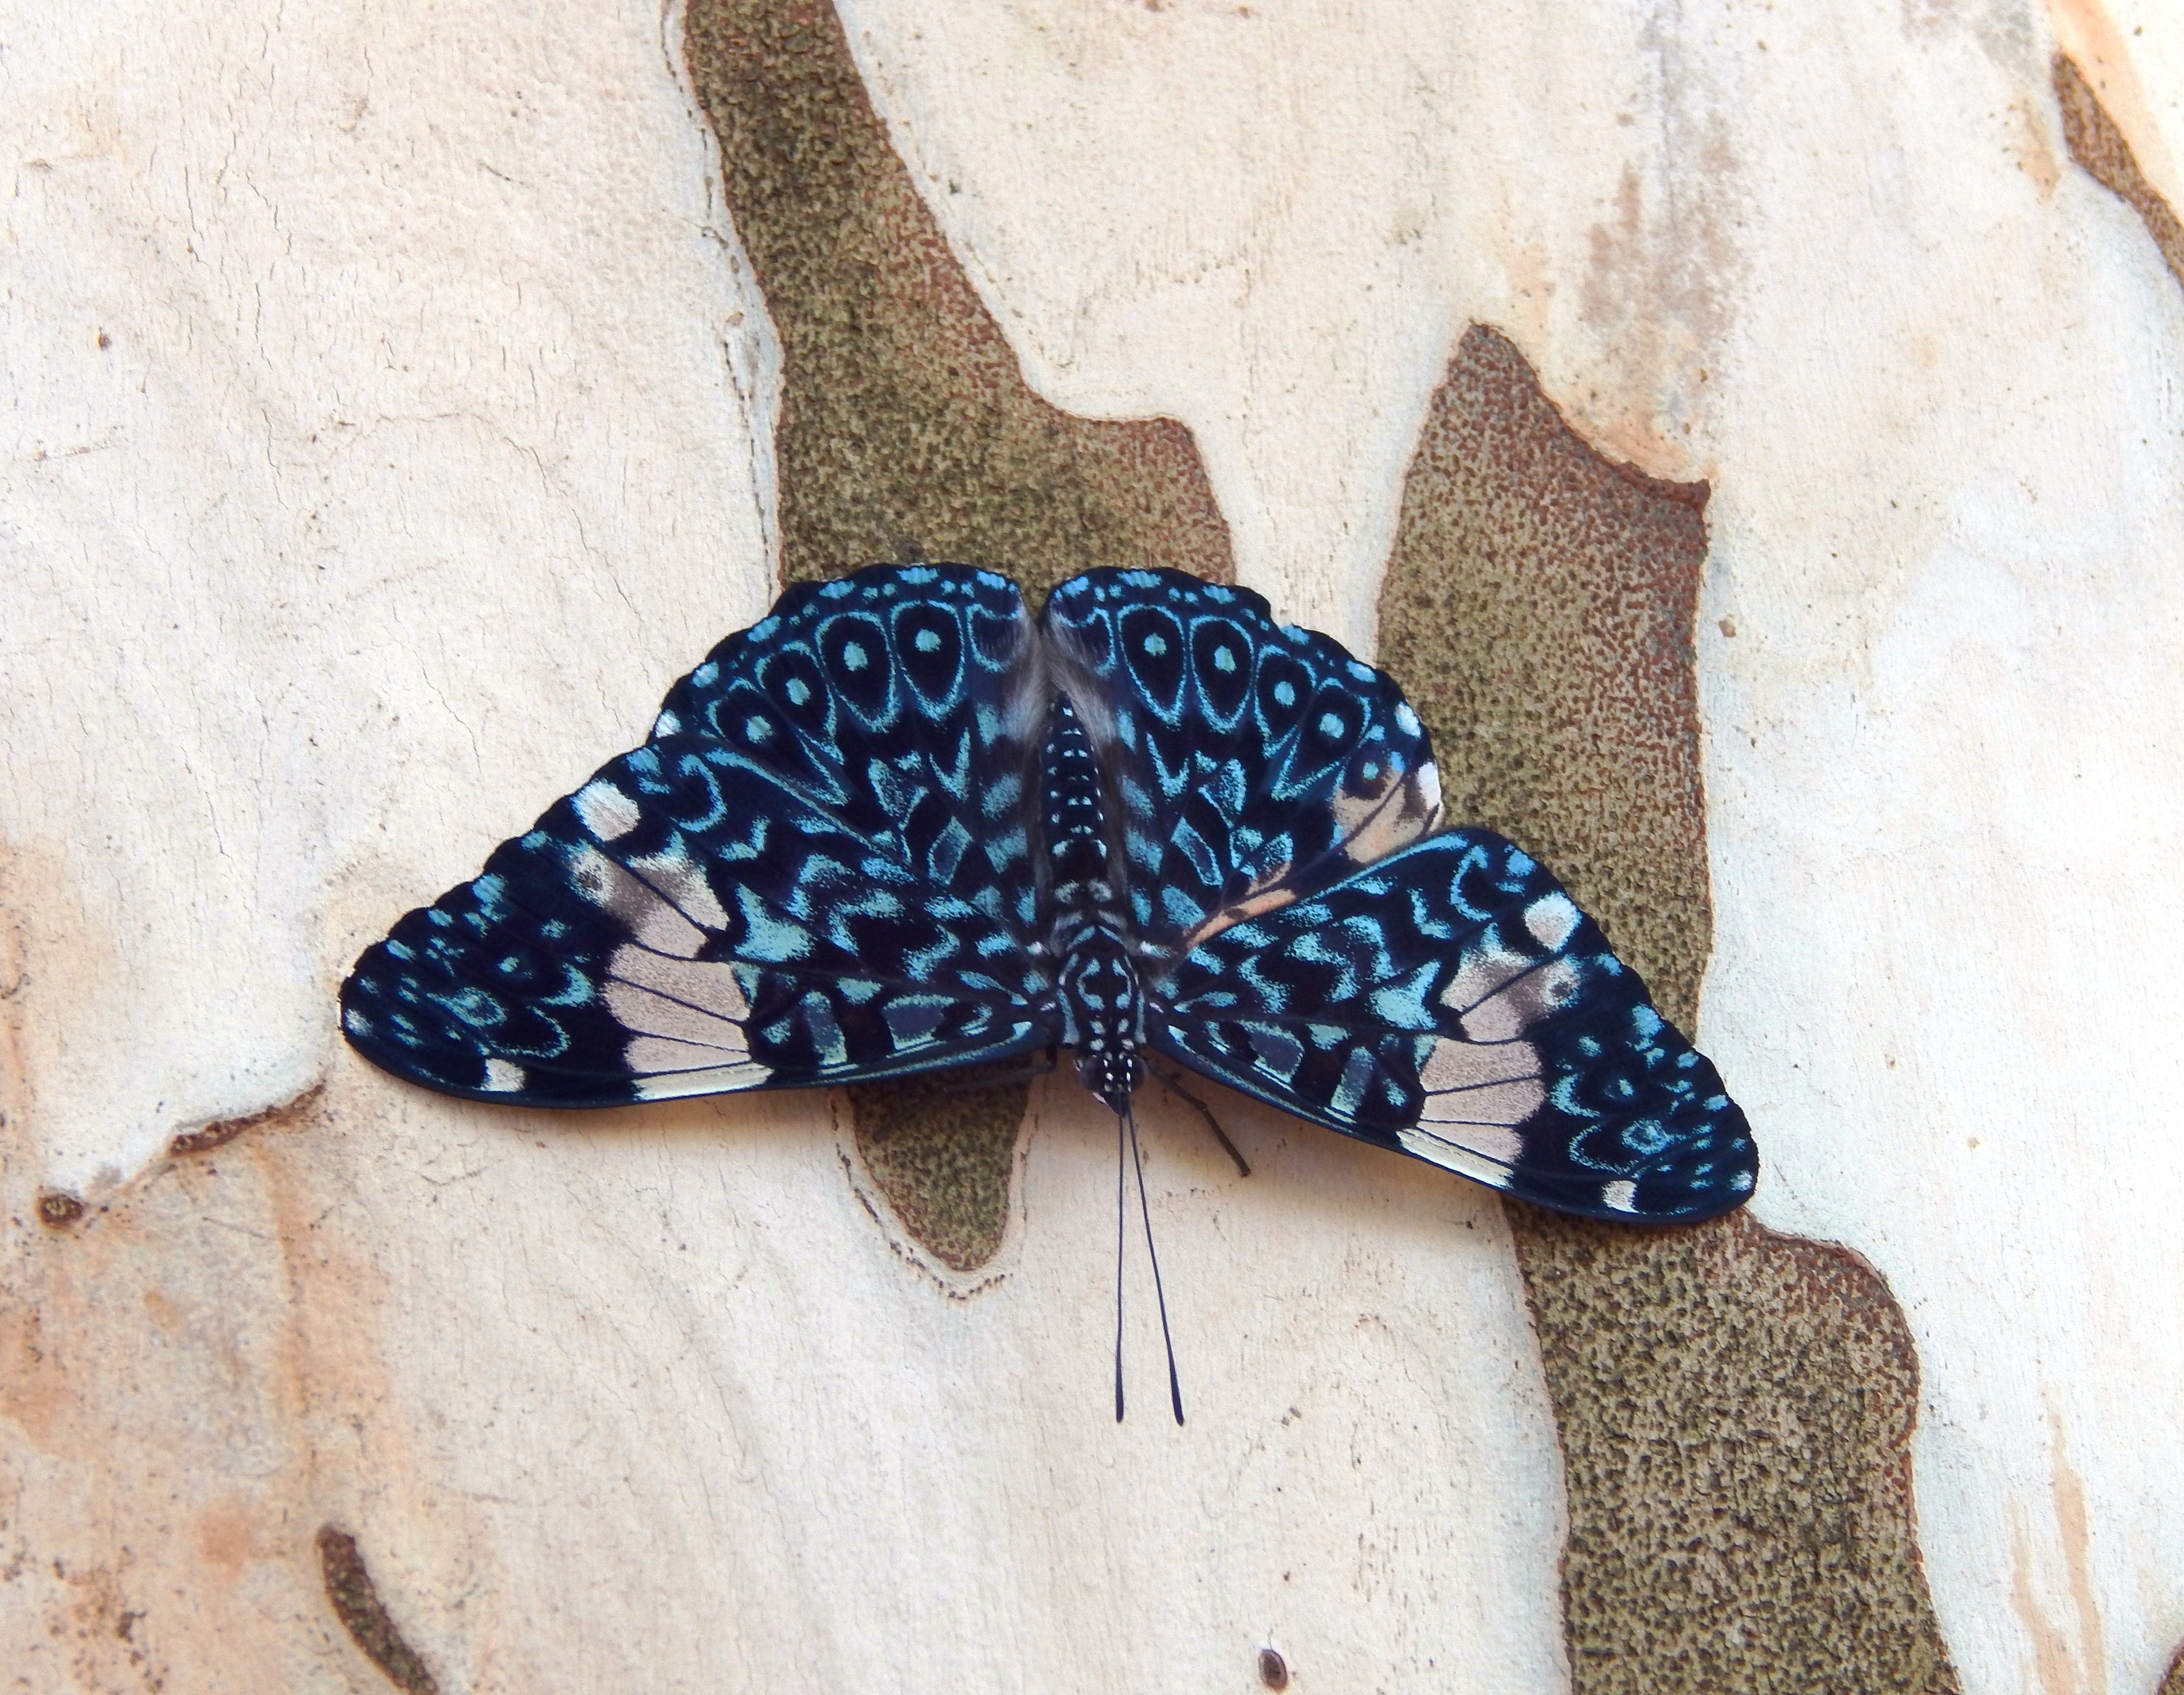 blue and black moth